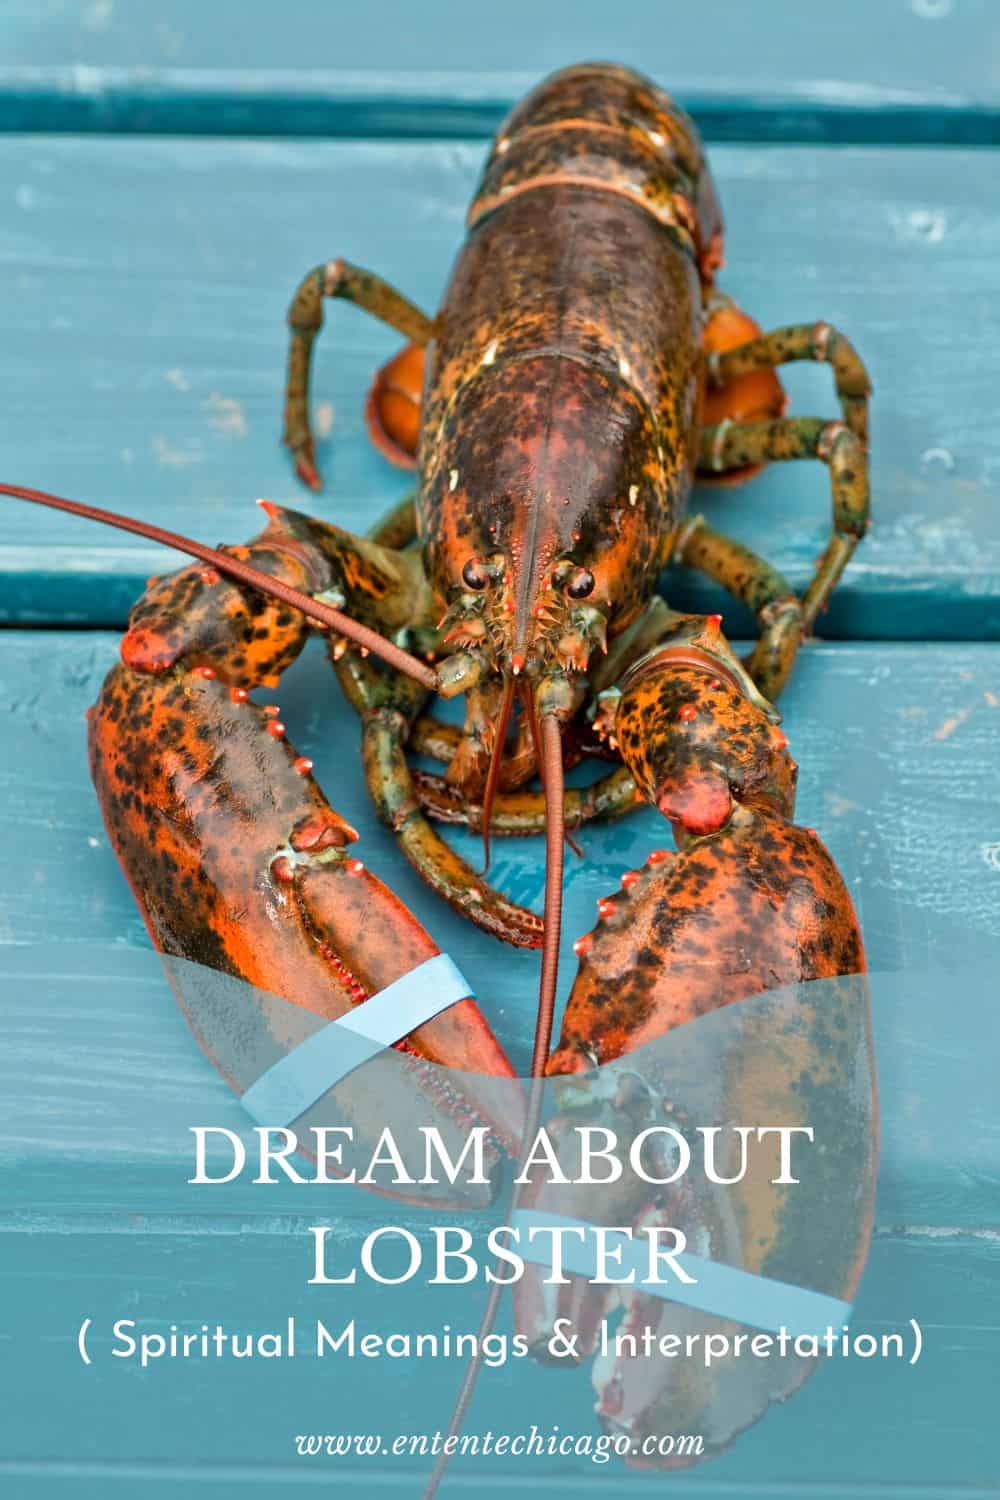  8 Interprétation des rêves de homard